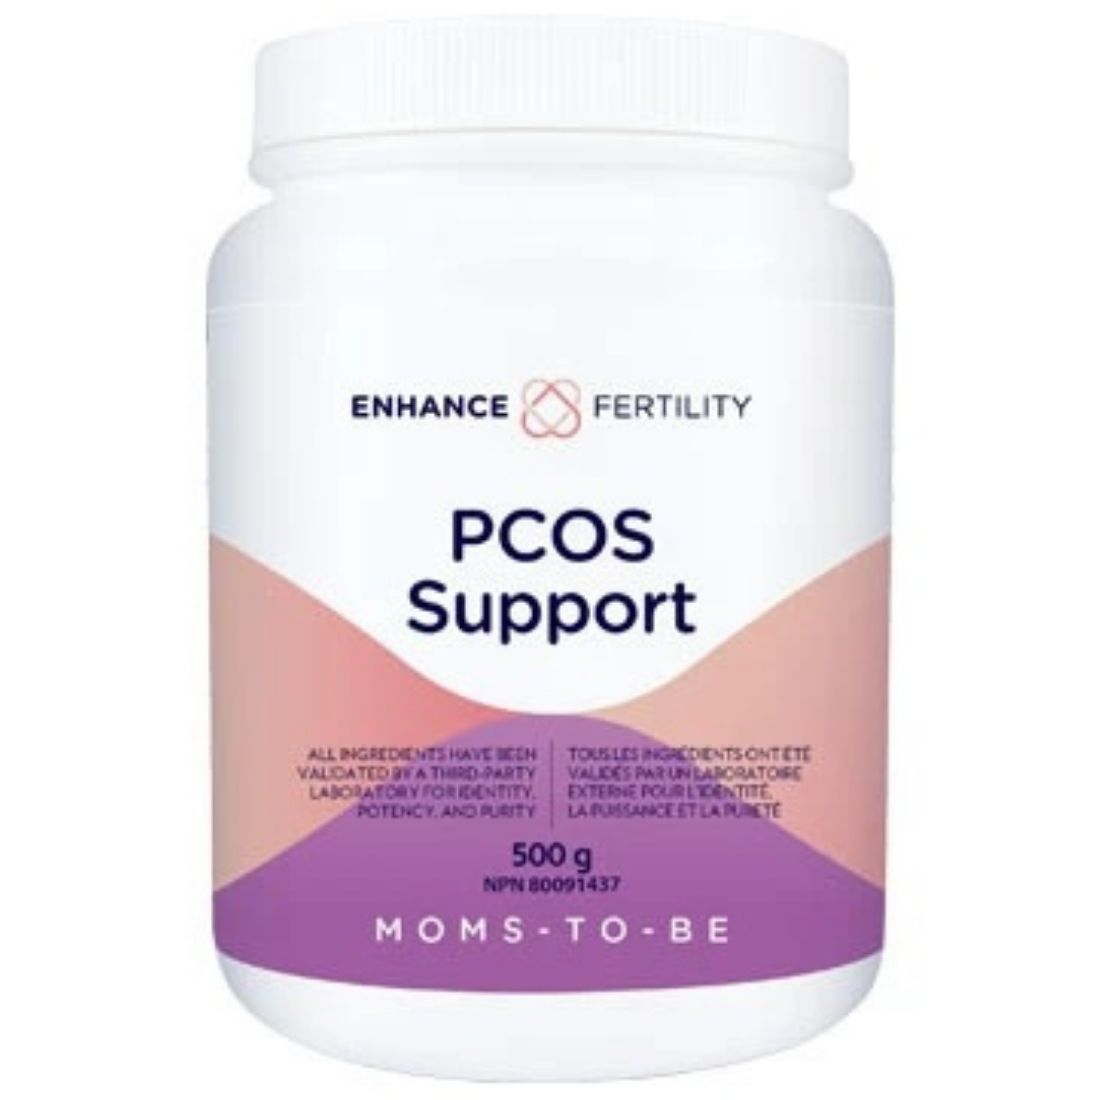 Enhance Fertility PCOS Support Power, 500g